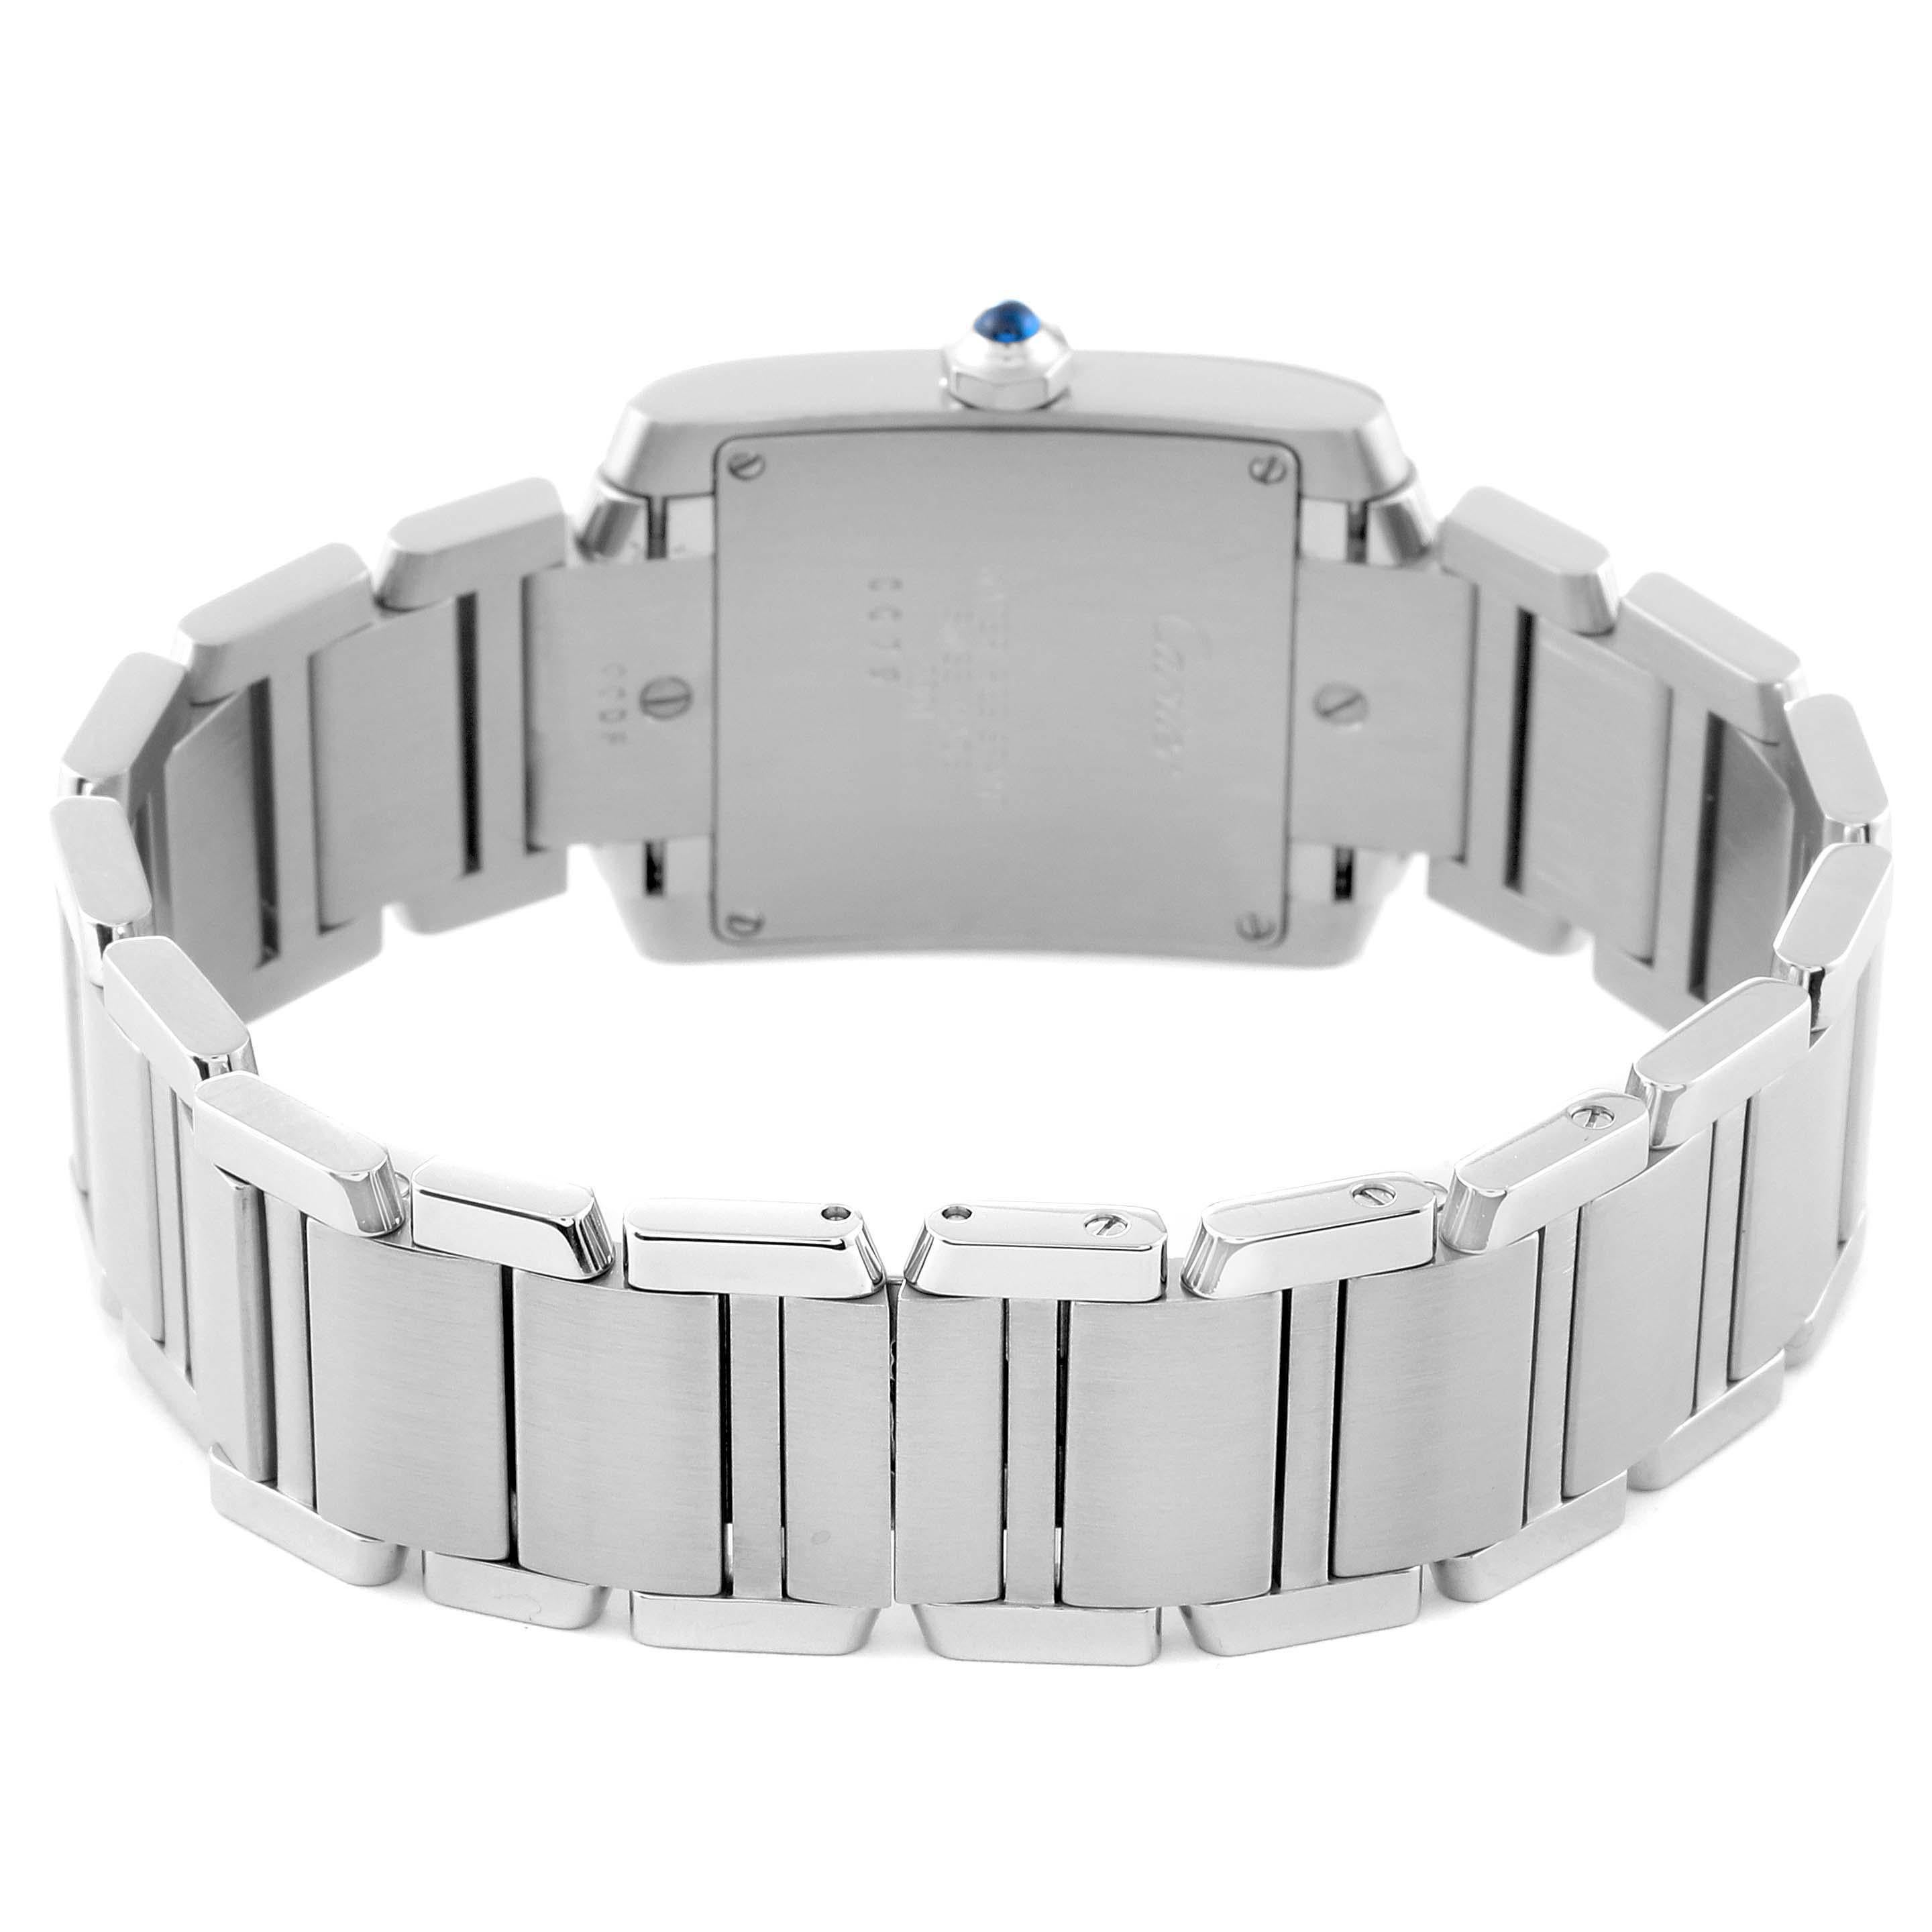 Cartier Tank Francaise Midsize Silver Dial Ladies Watch W51003Q3 2